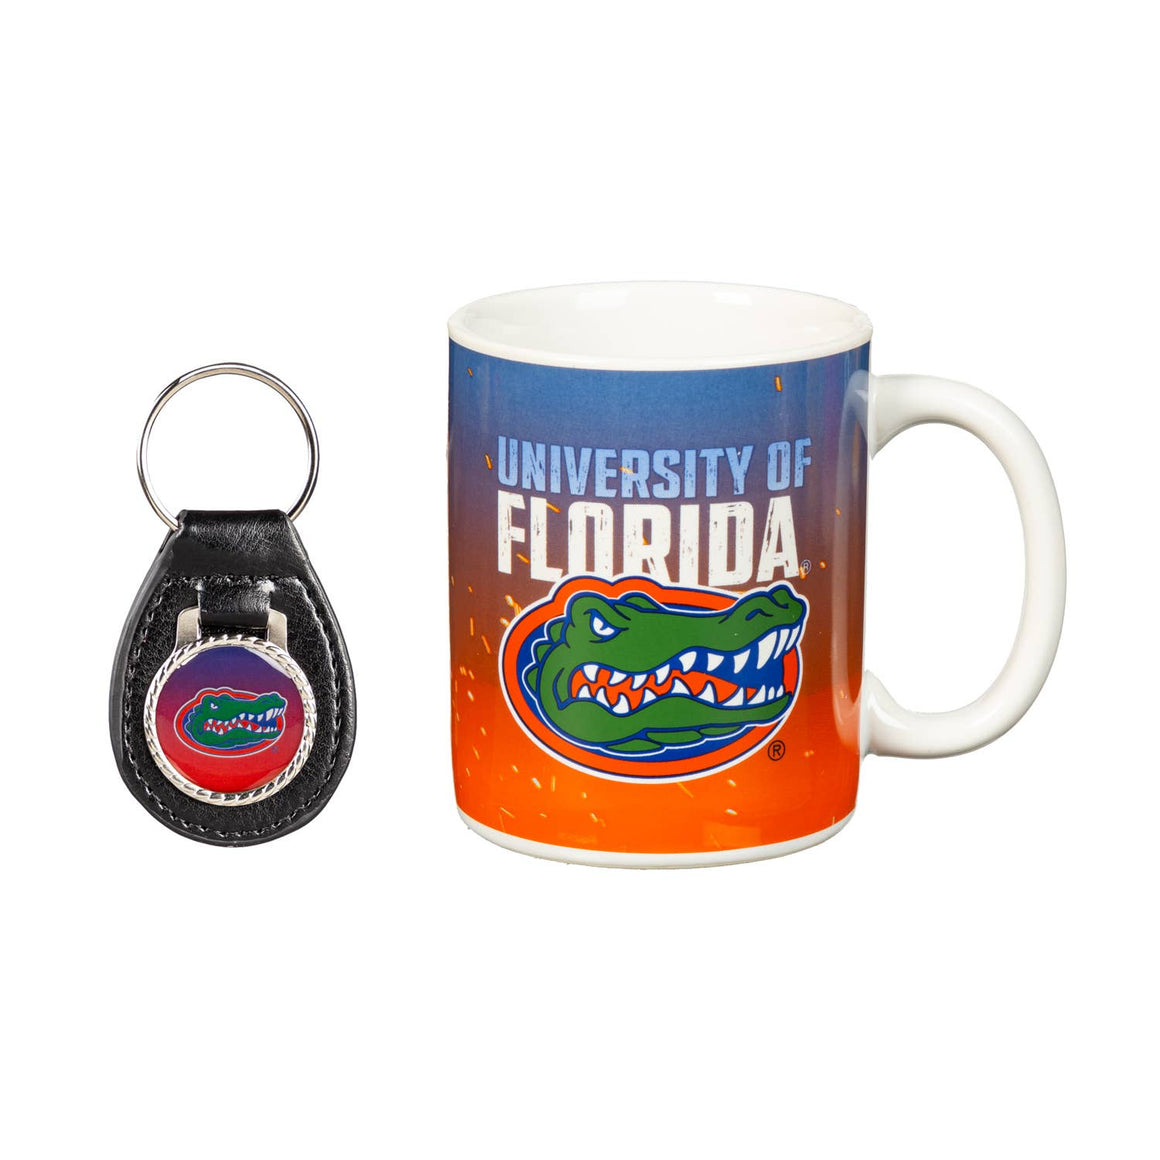 Cup Gift Set, University of Florida